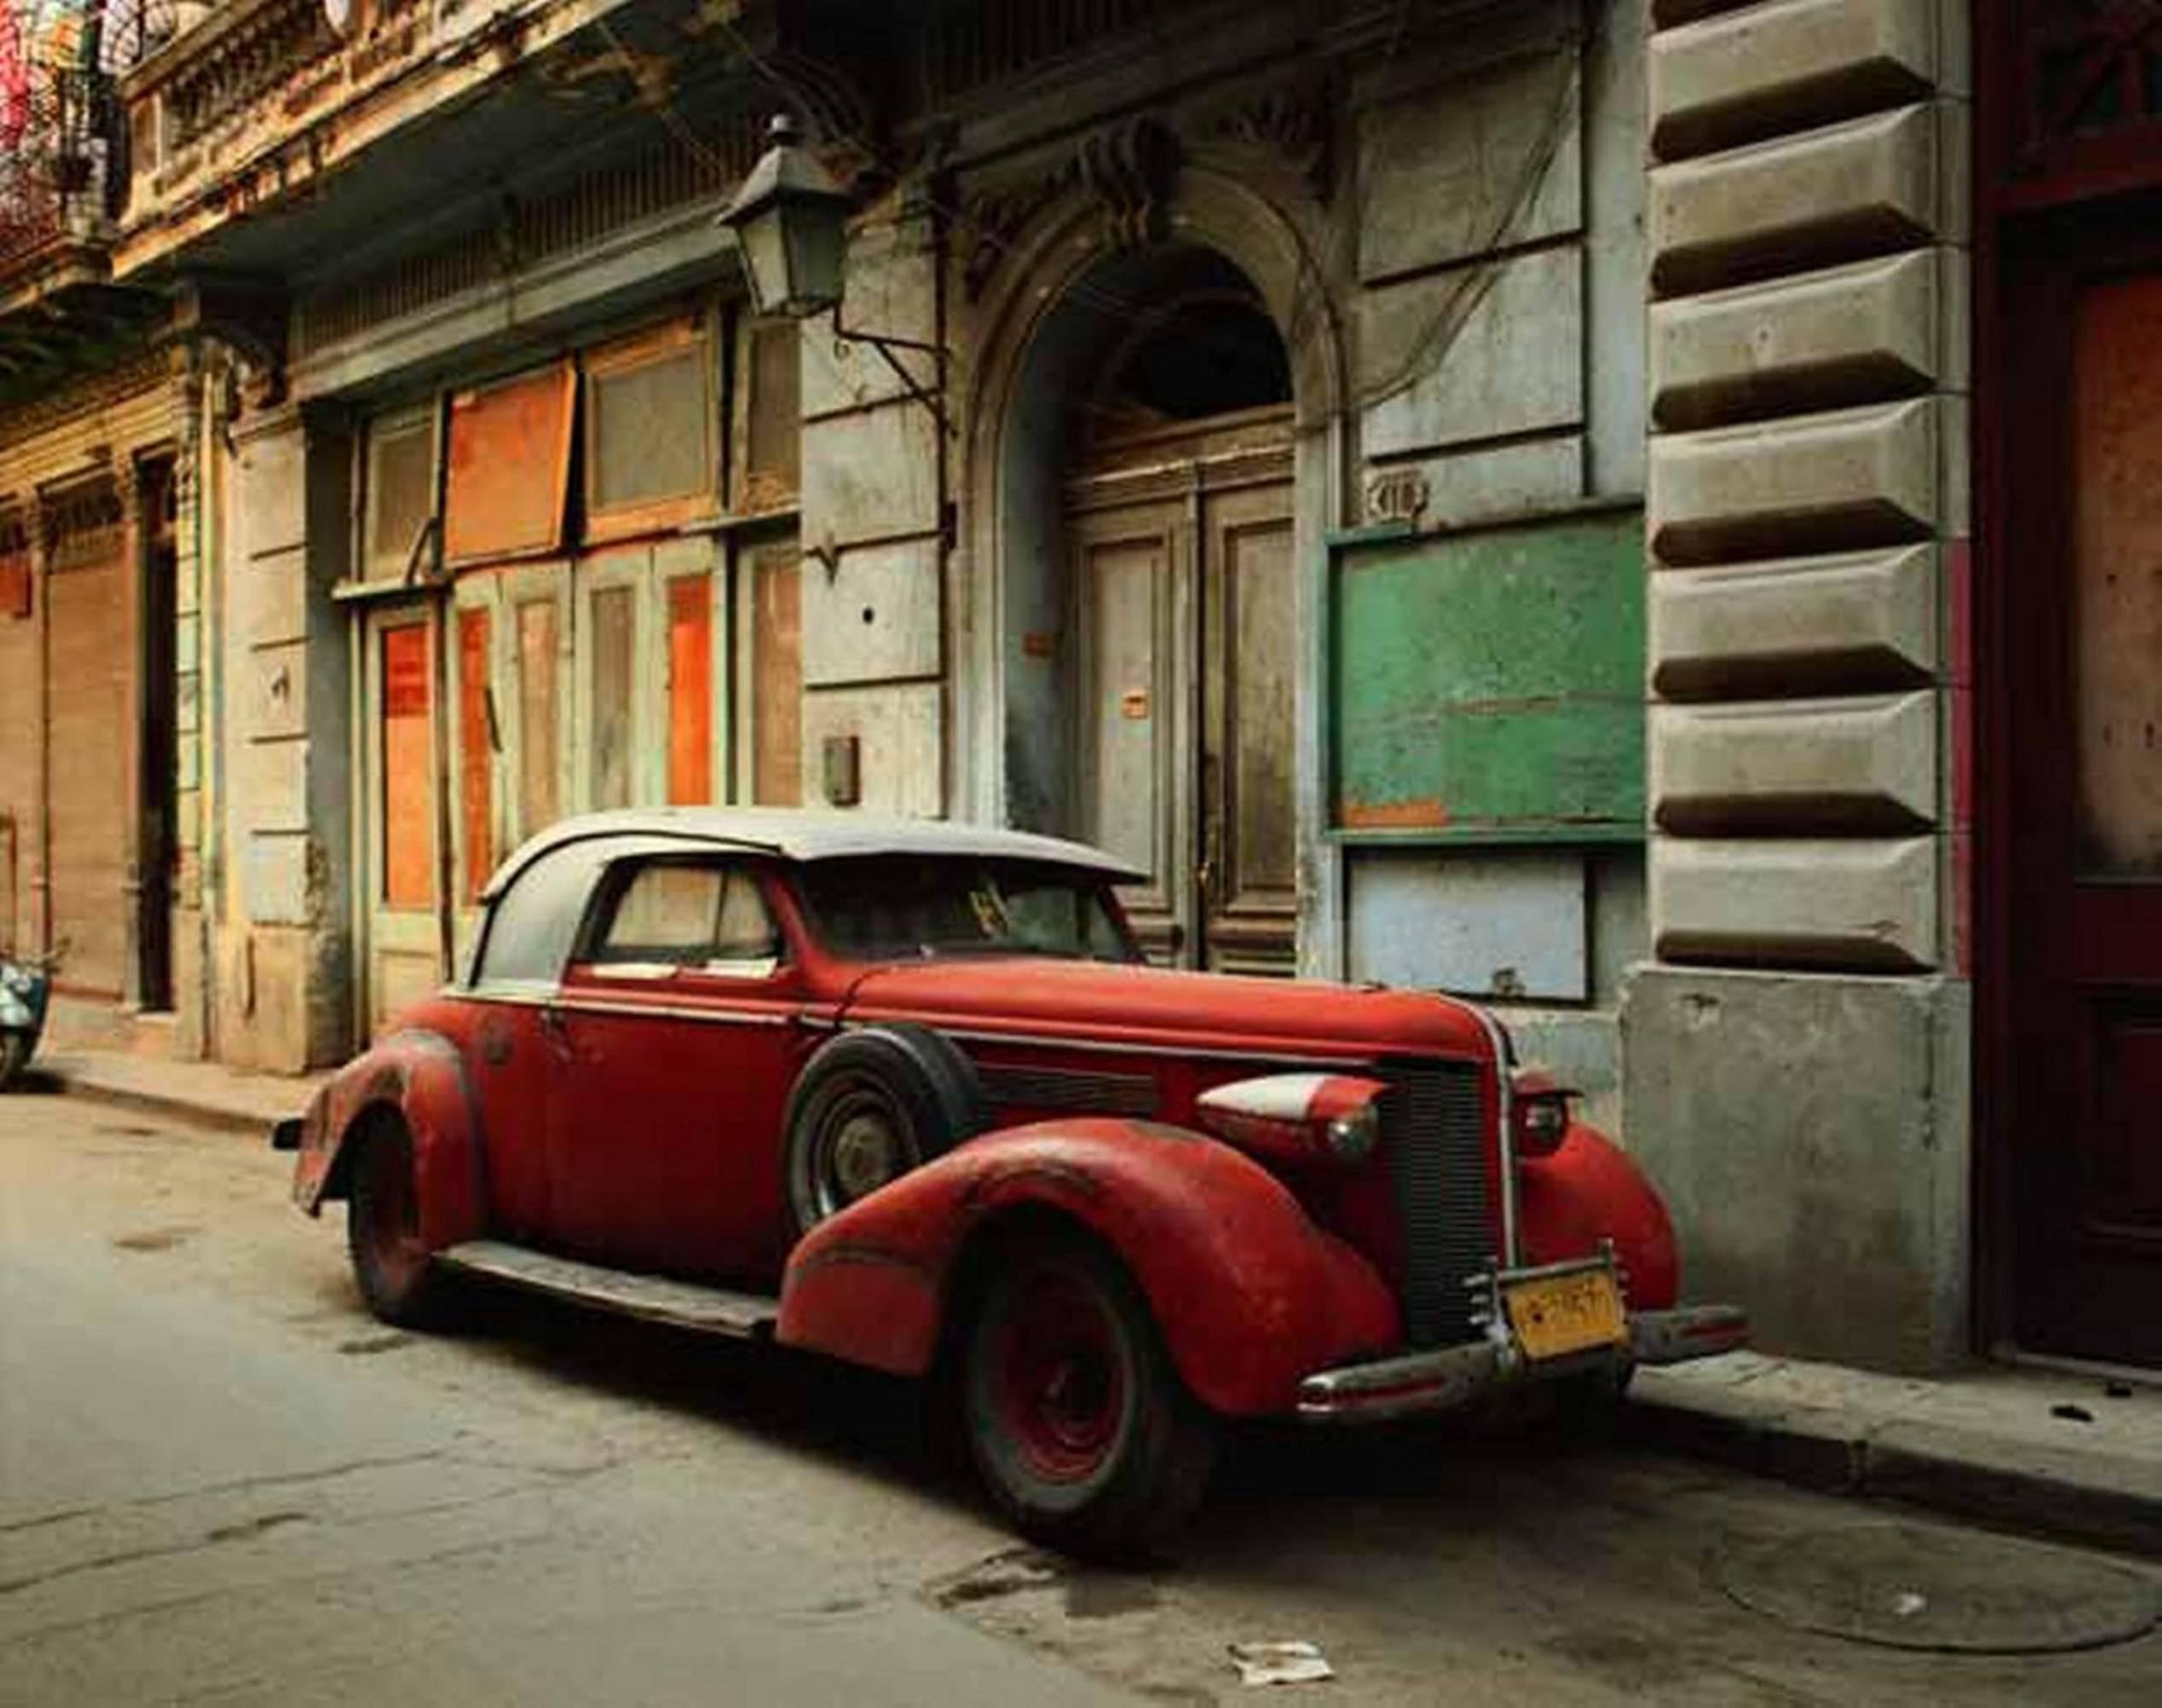 Robert Polidori Color Photograph - Vintage Car with Composite Parts, Havana, Cuba